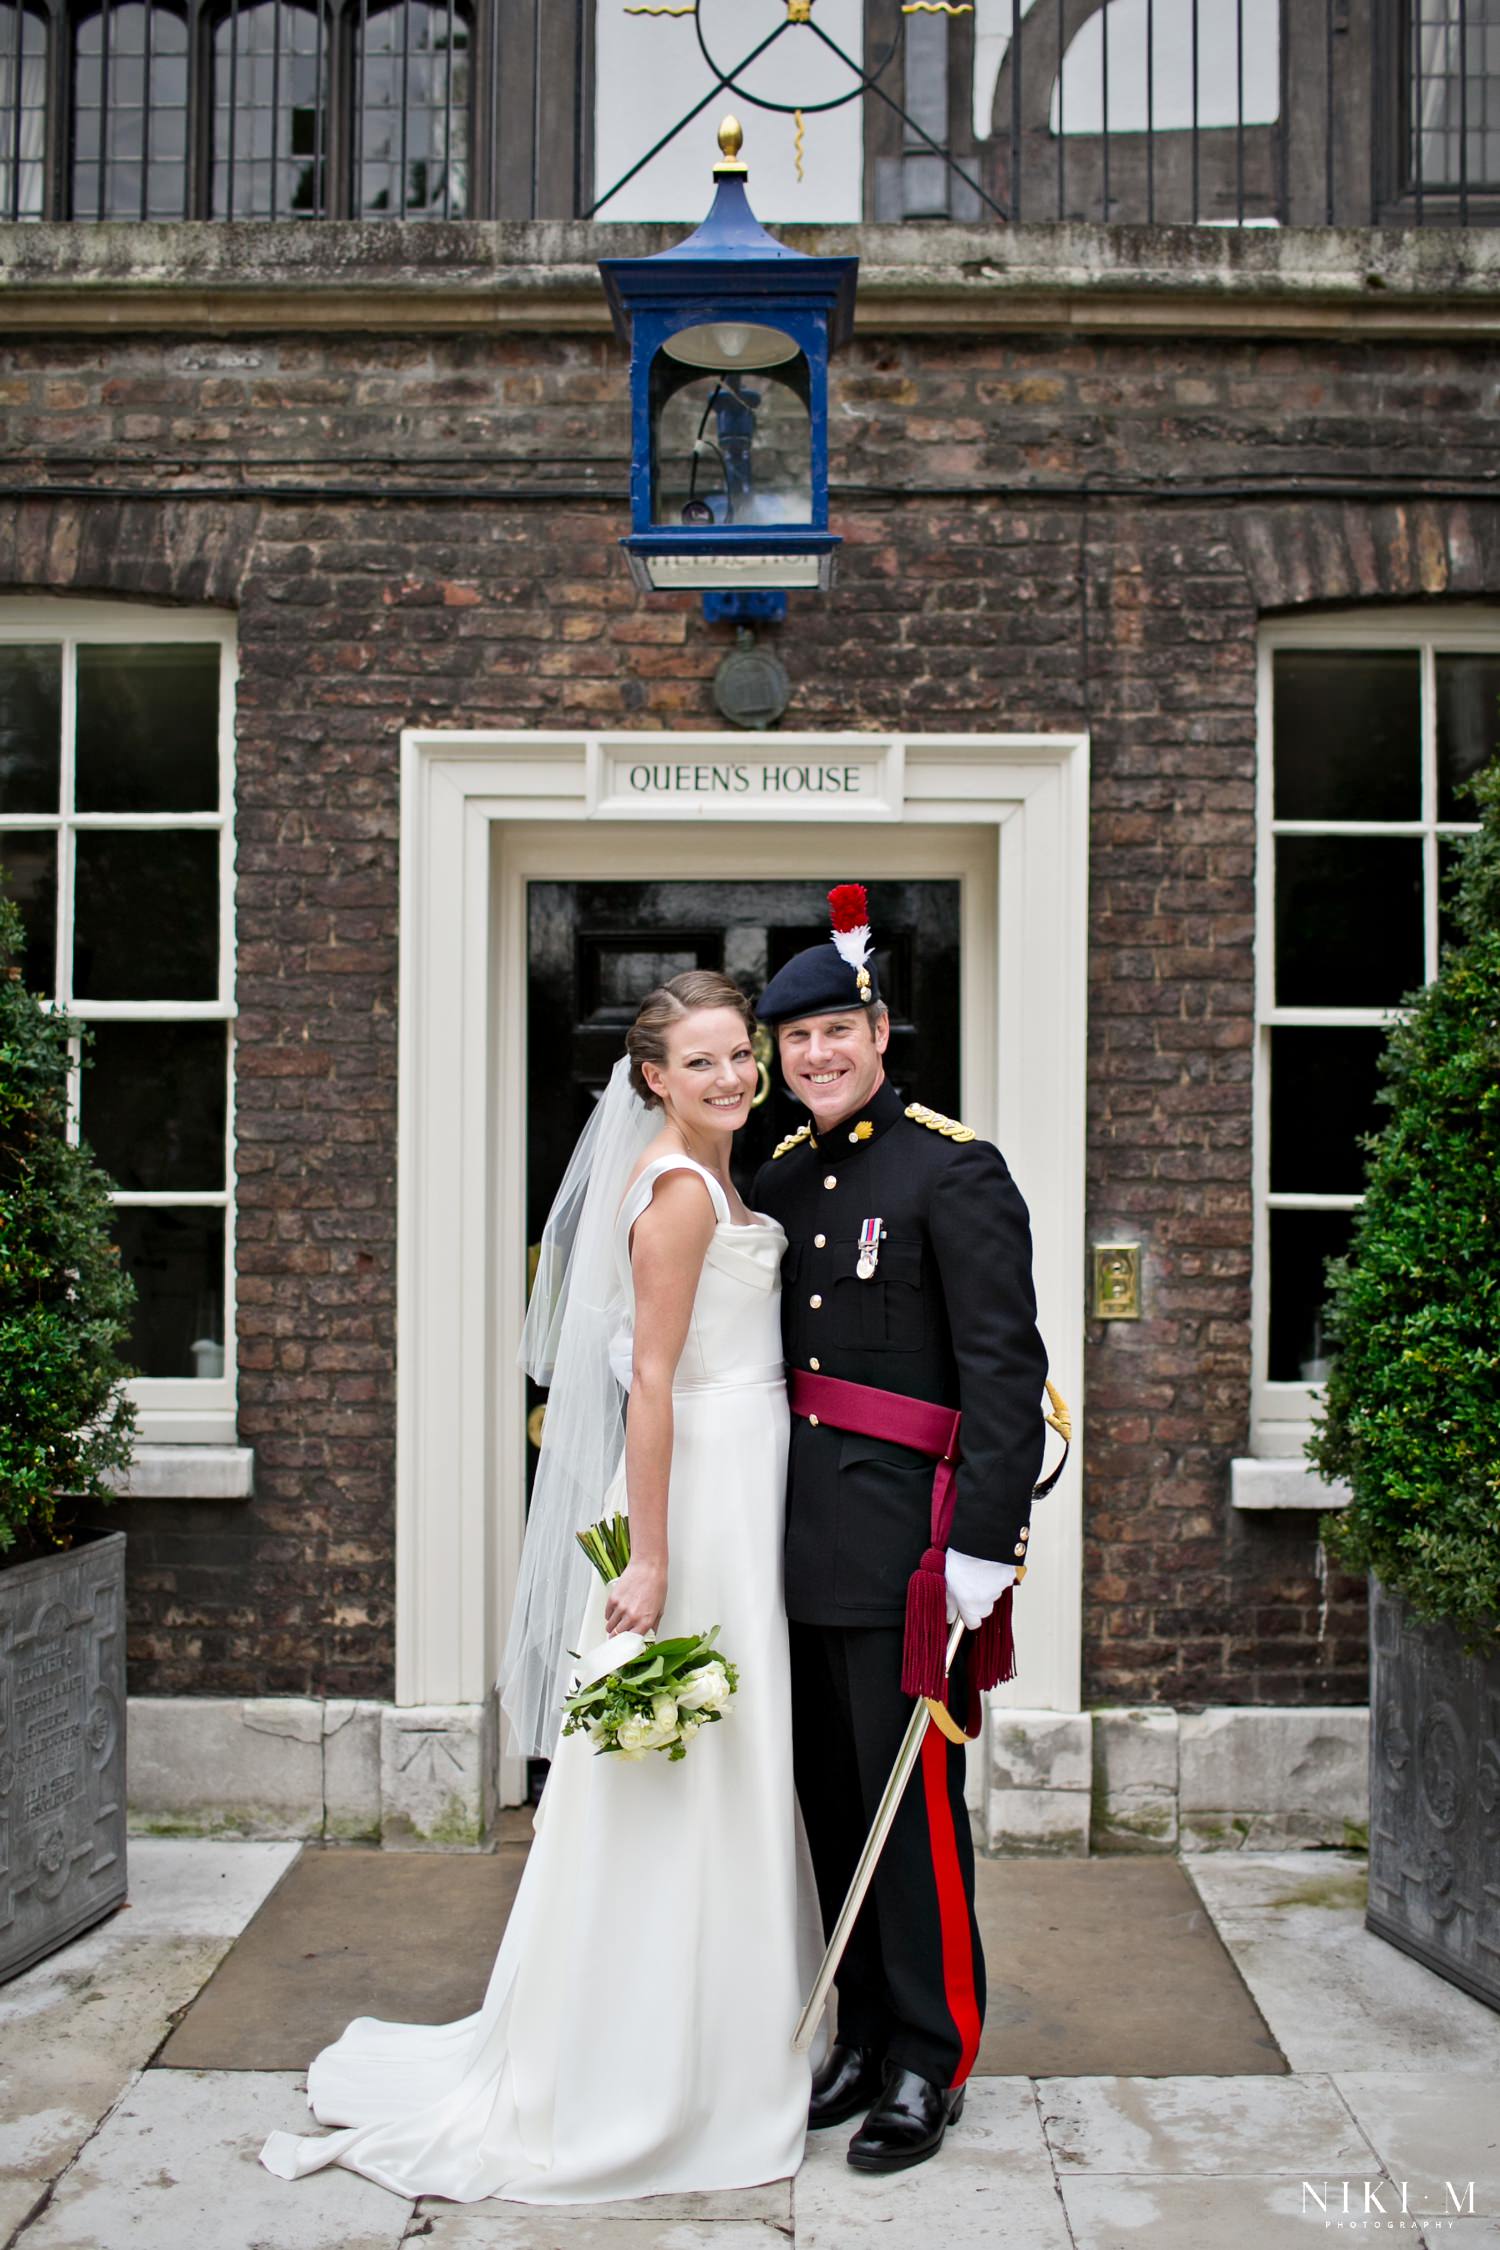 Tower of London wedding photos